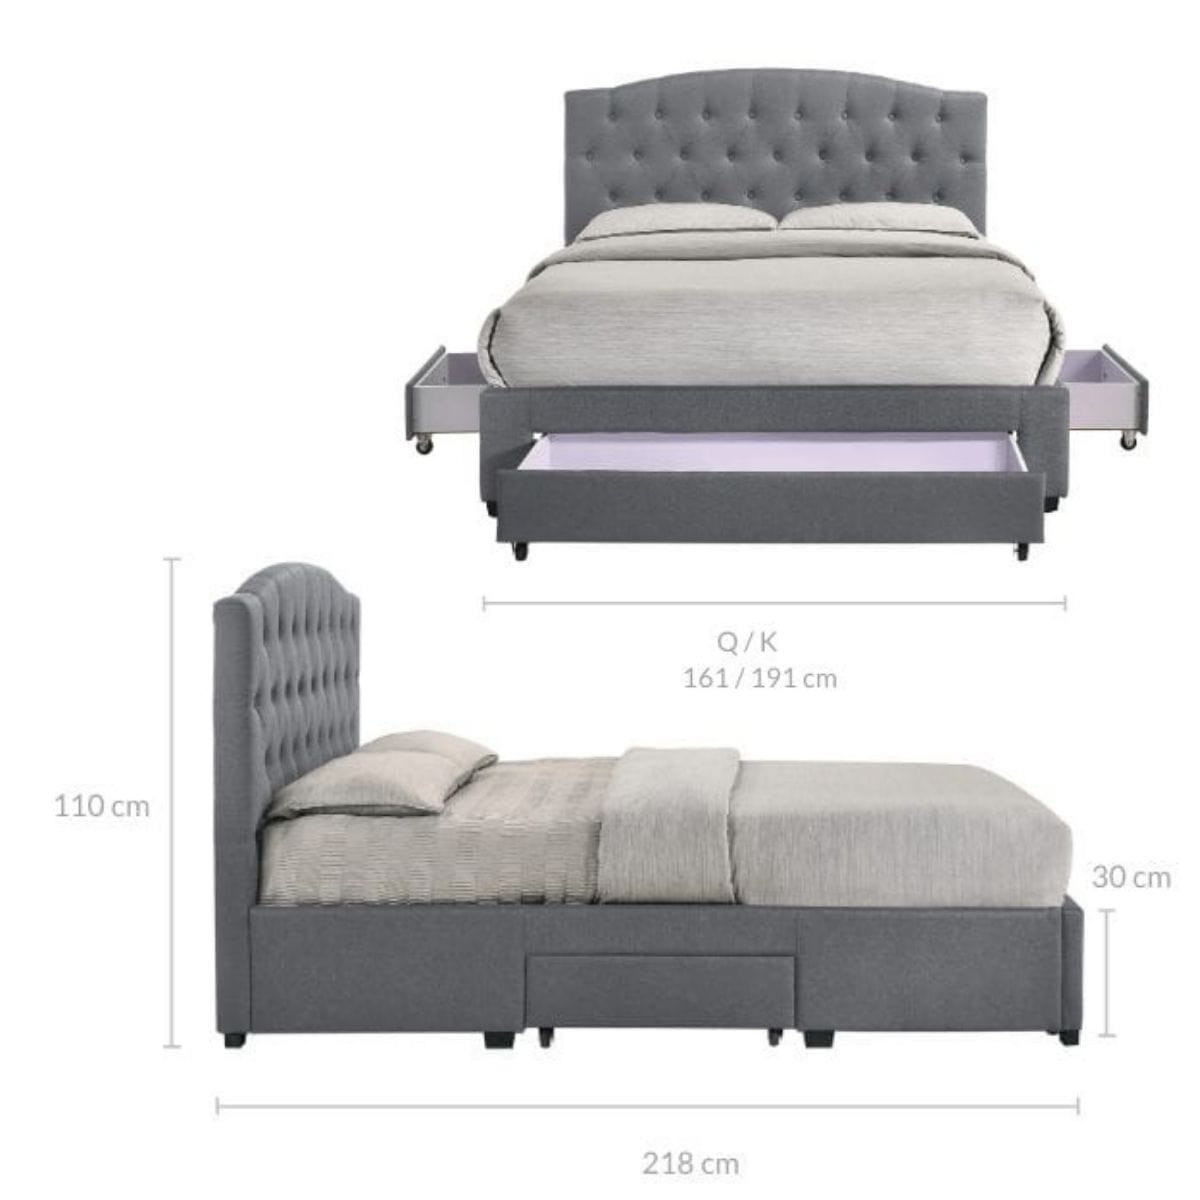 French Provincial Modern Fabric Platform Bed Base Frame with Storage Drawers King Light Grey - Newstart Furniture